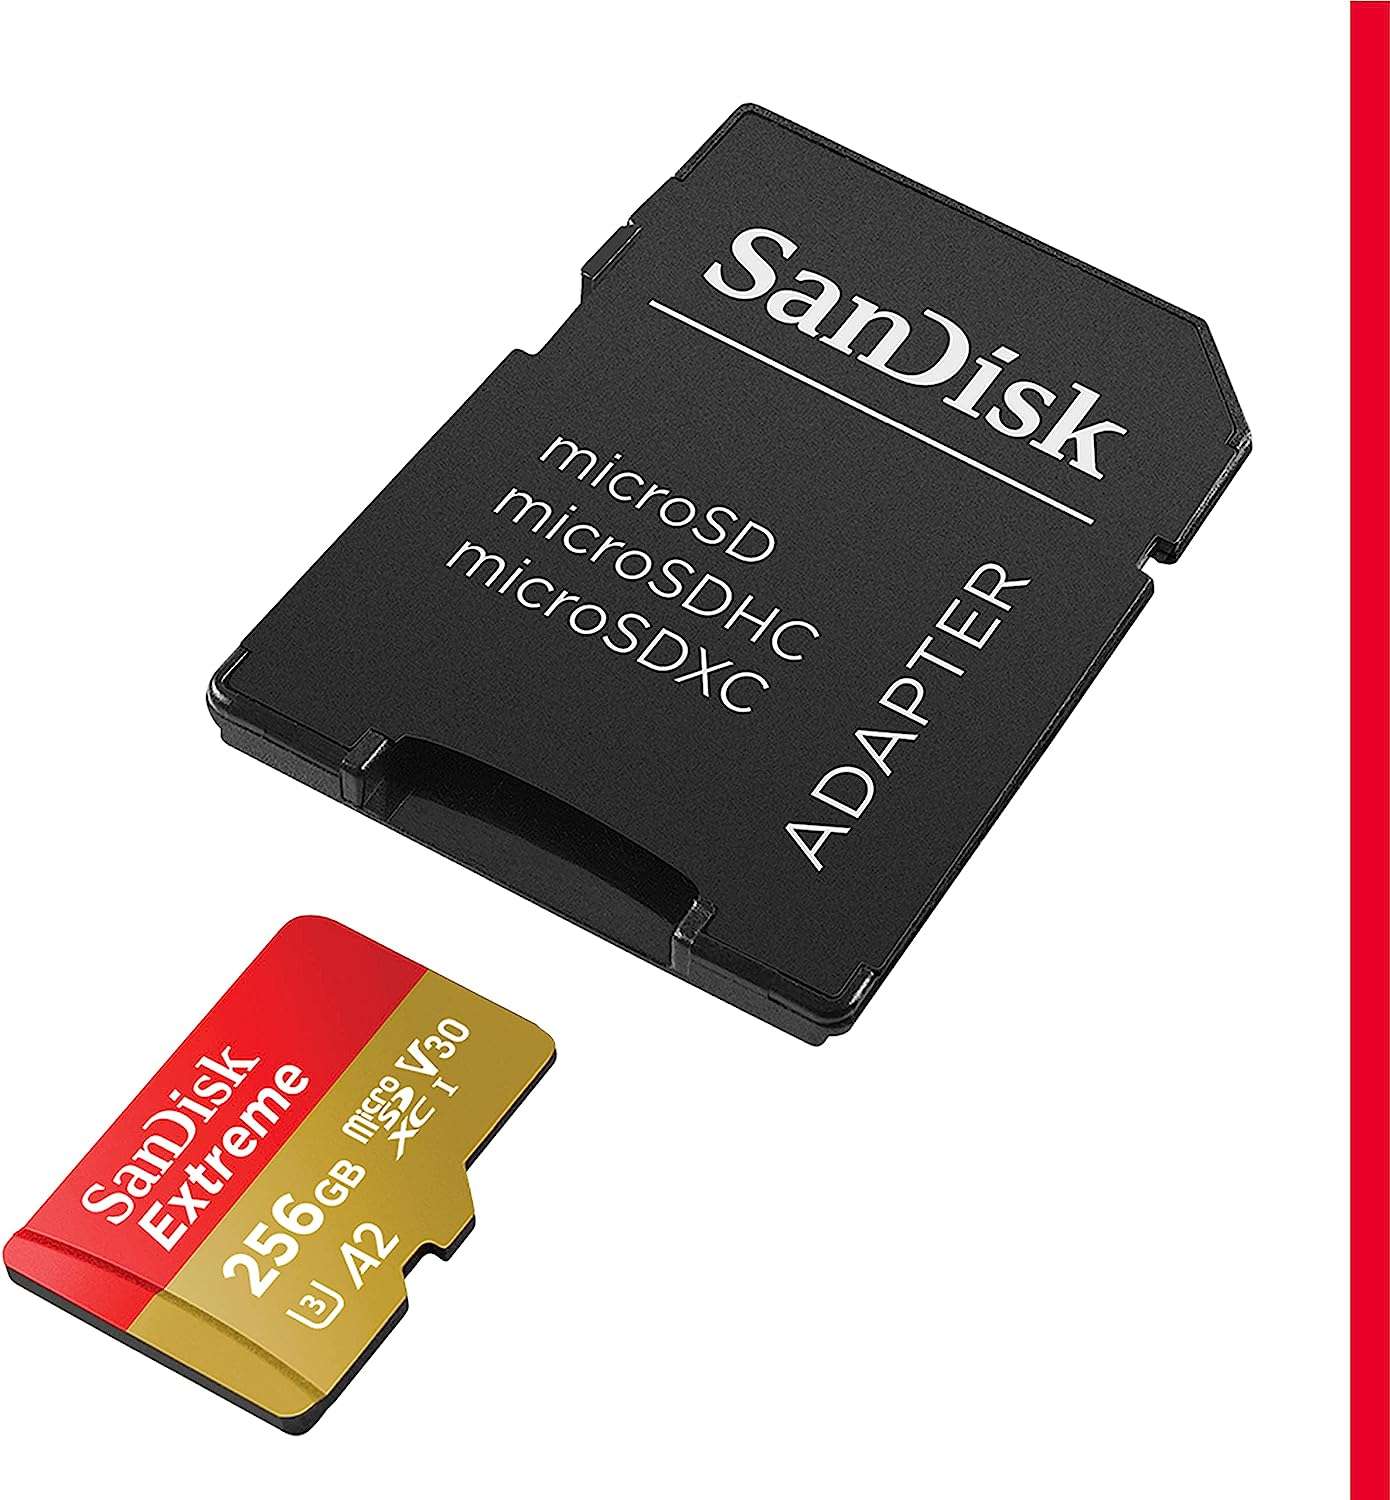 SanDisk Extreme microSDXC 256GB SD card + adapter 